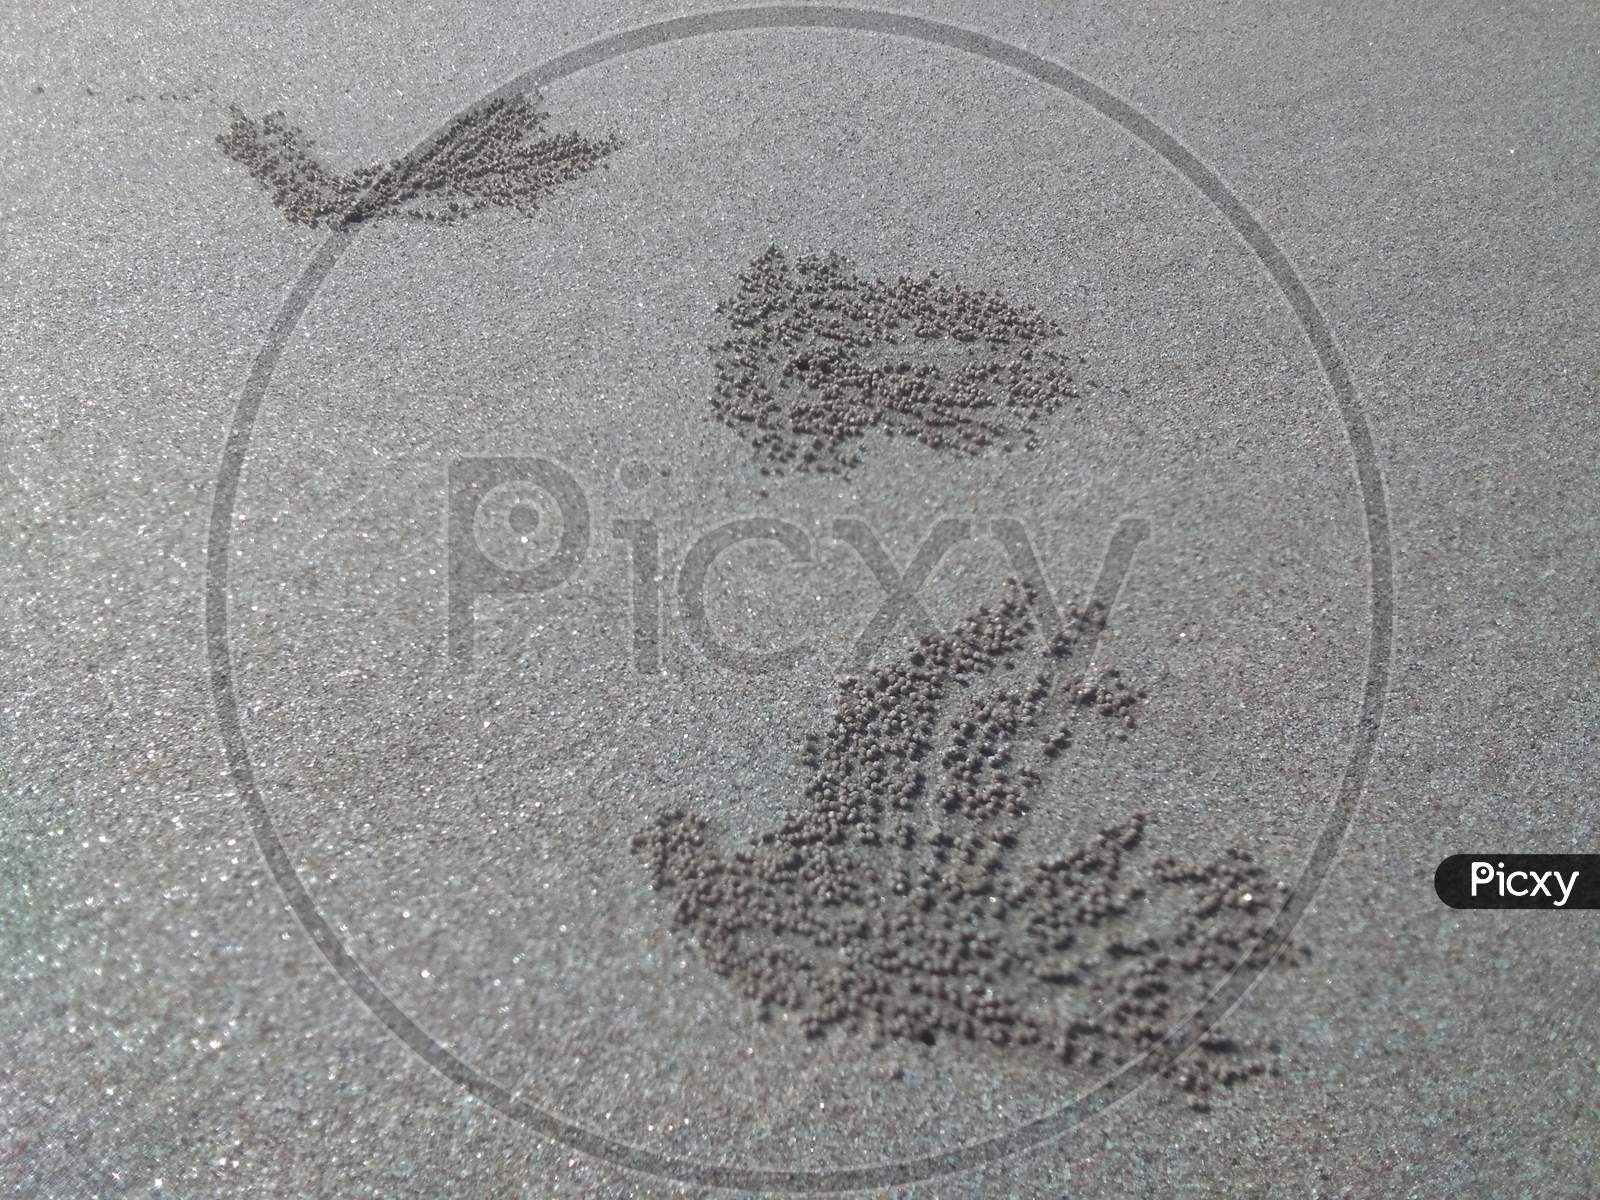 Weird texture at beach in foot print shape